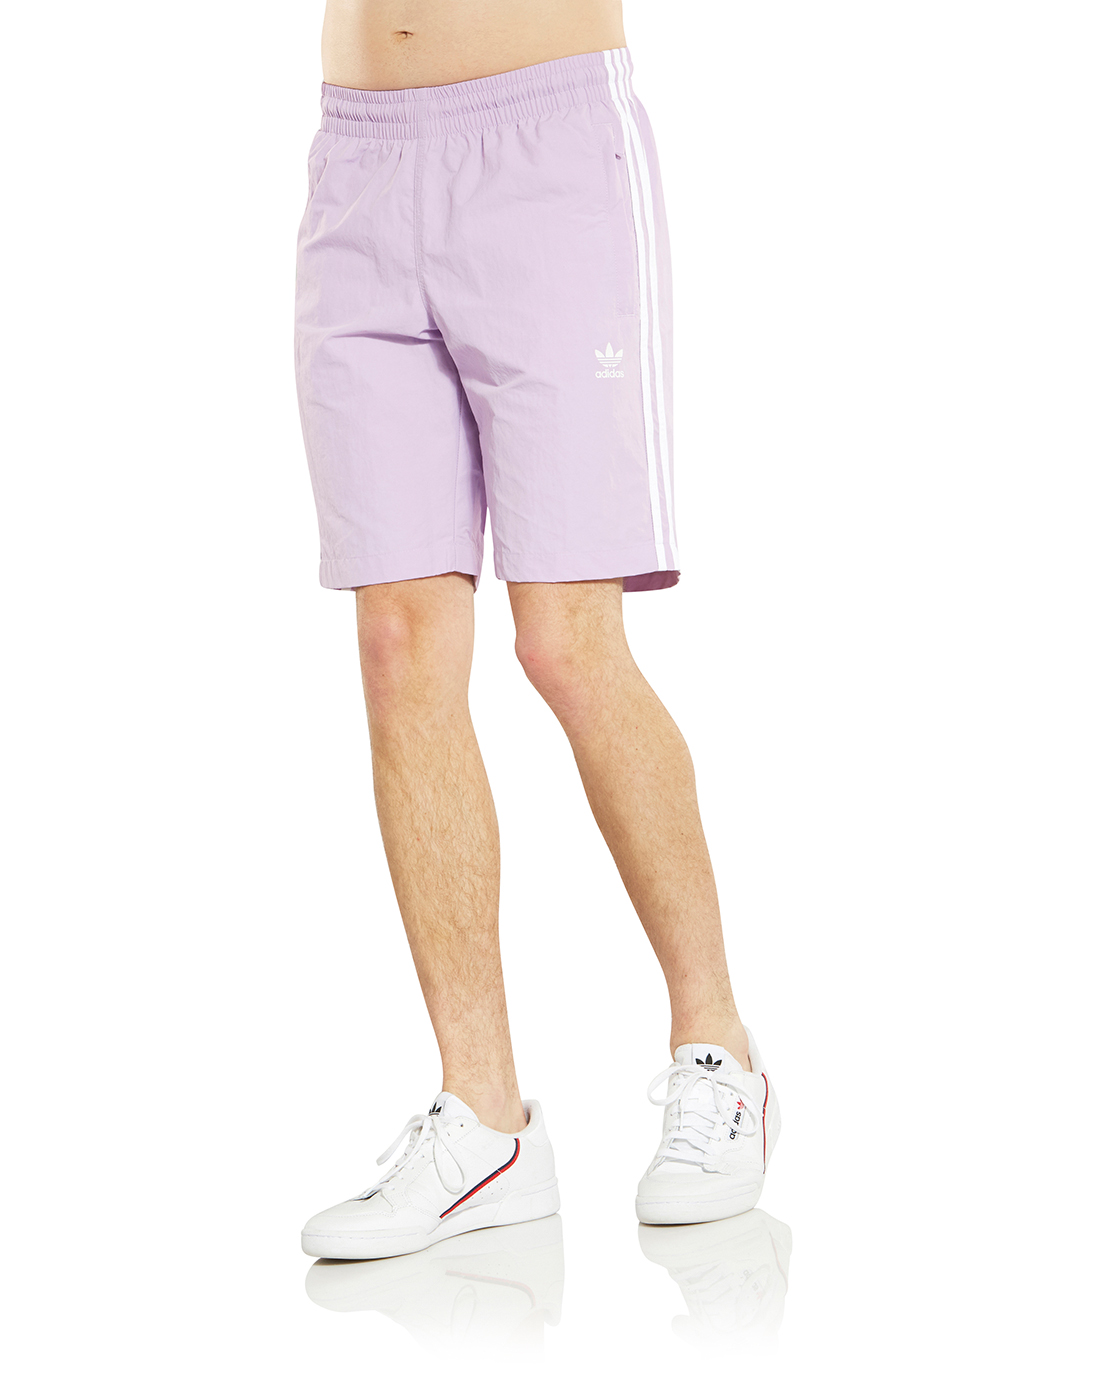 purple adidas shorts